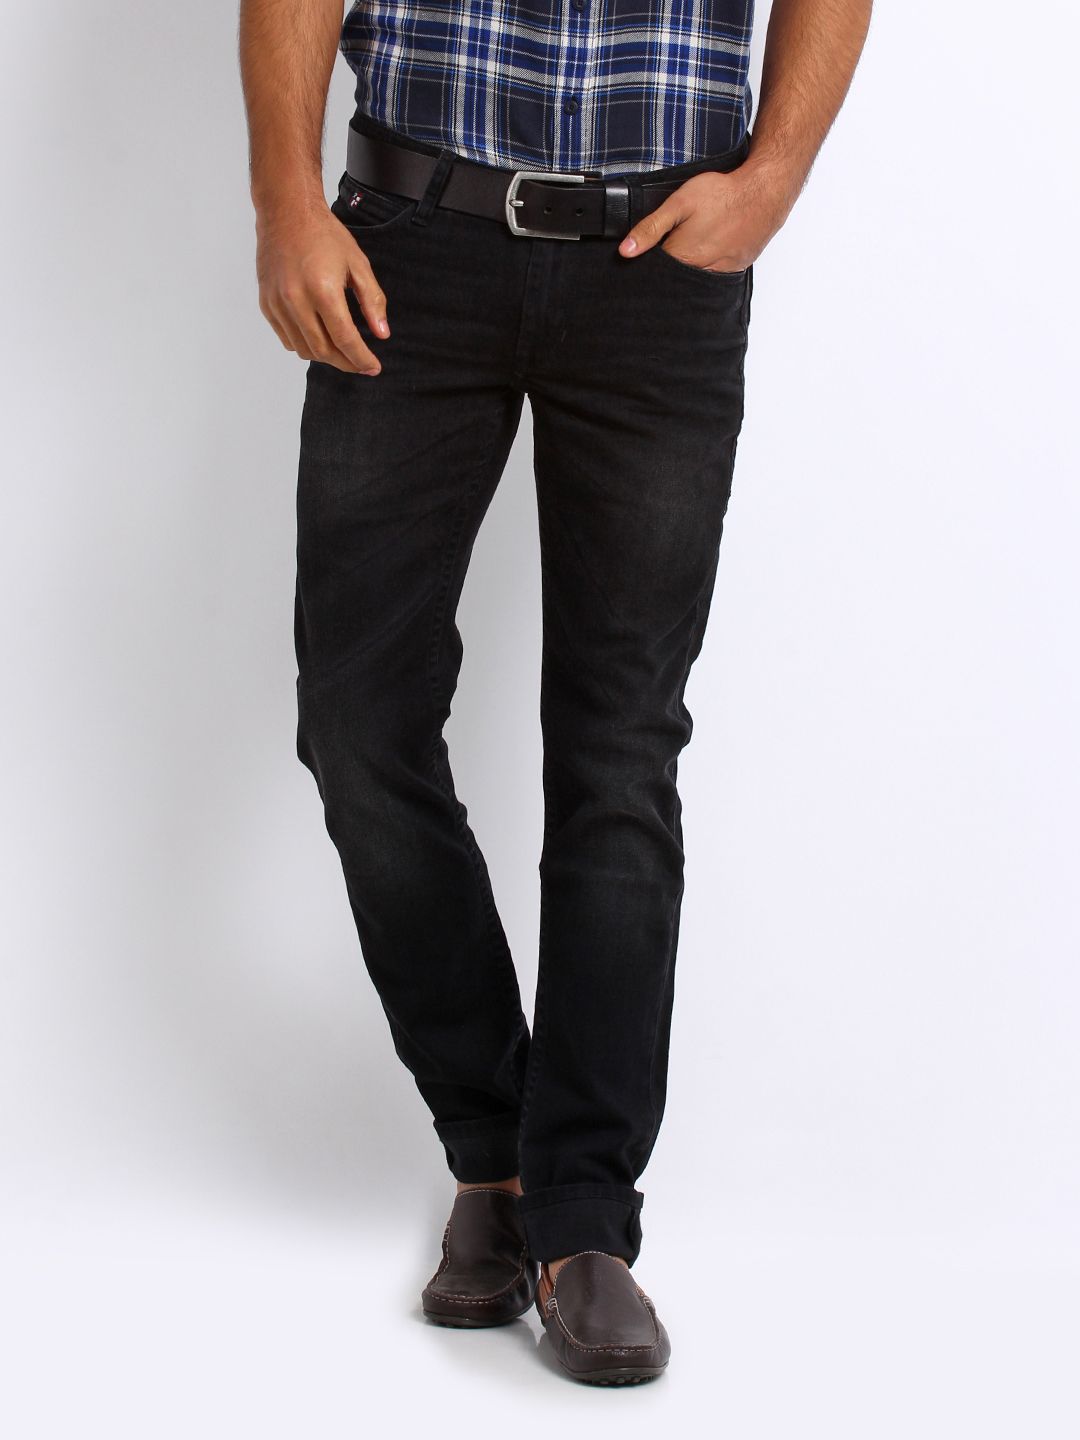 Buy U.S. Polo Assn. Men Black Skinny Fit Jeans - 363 - Apparel for Men ...